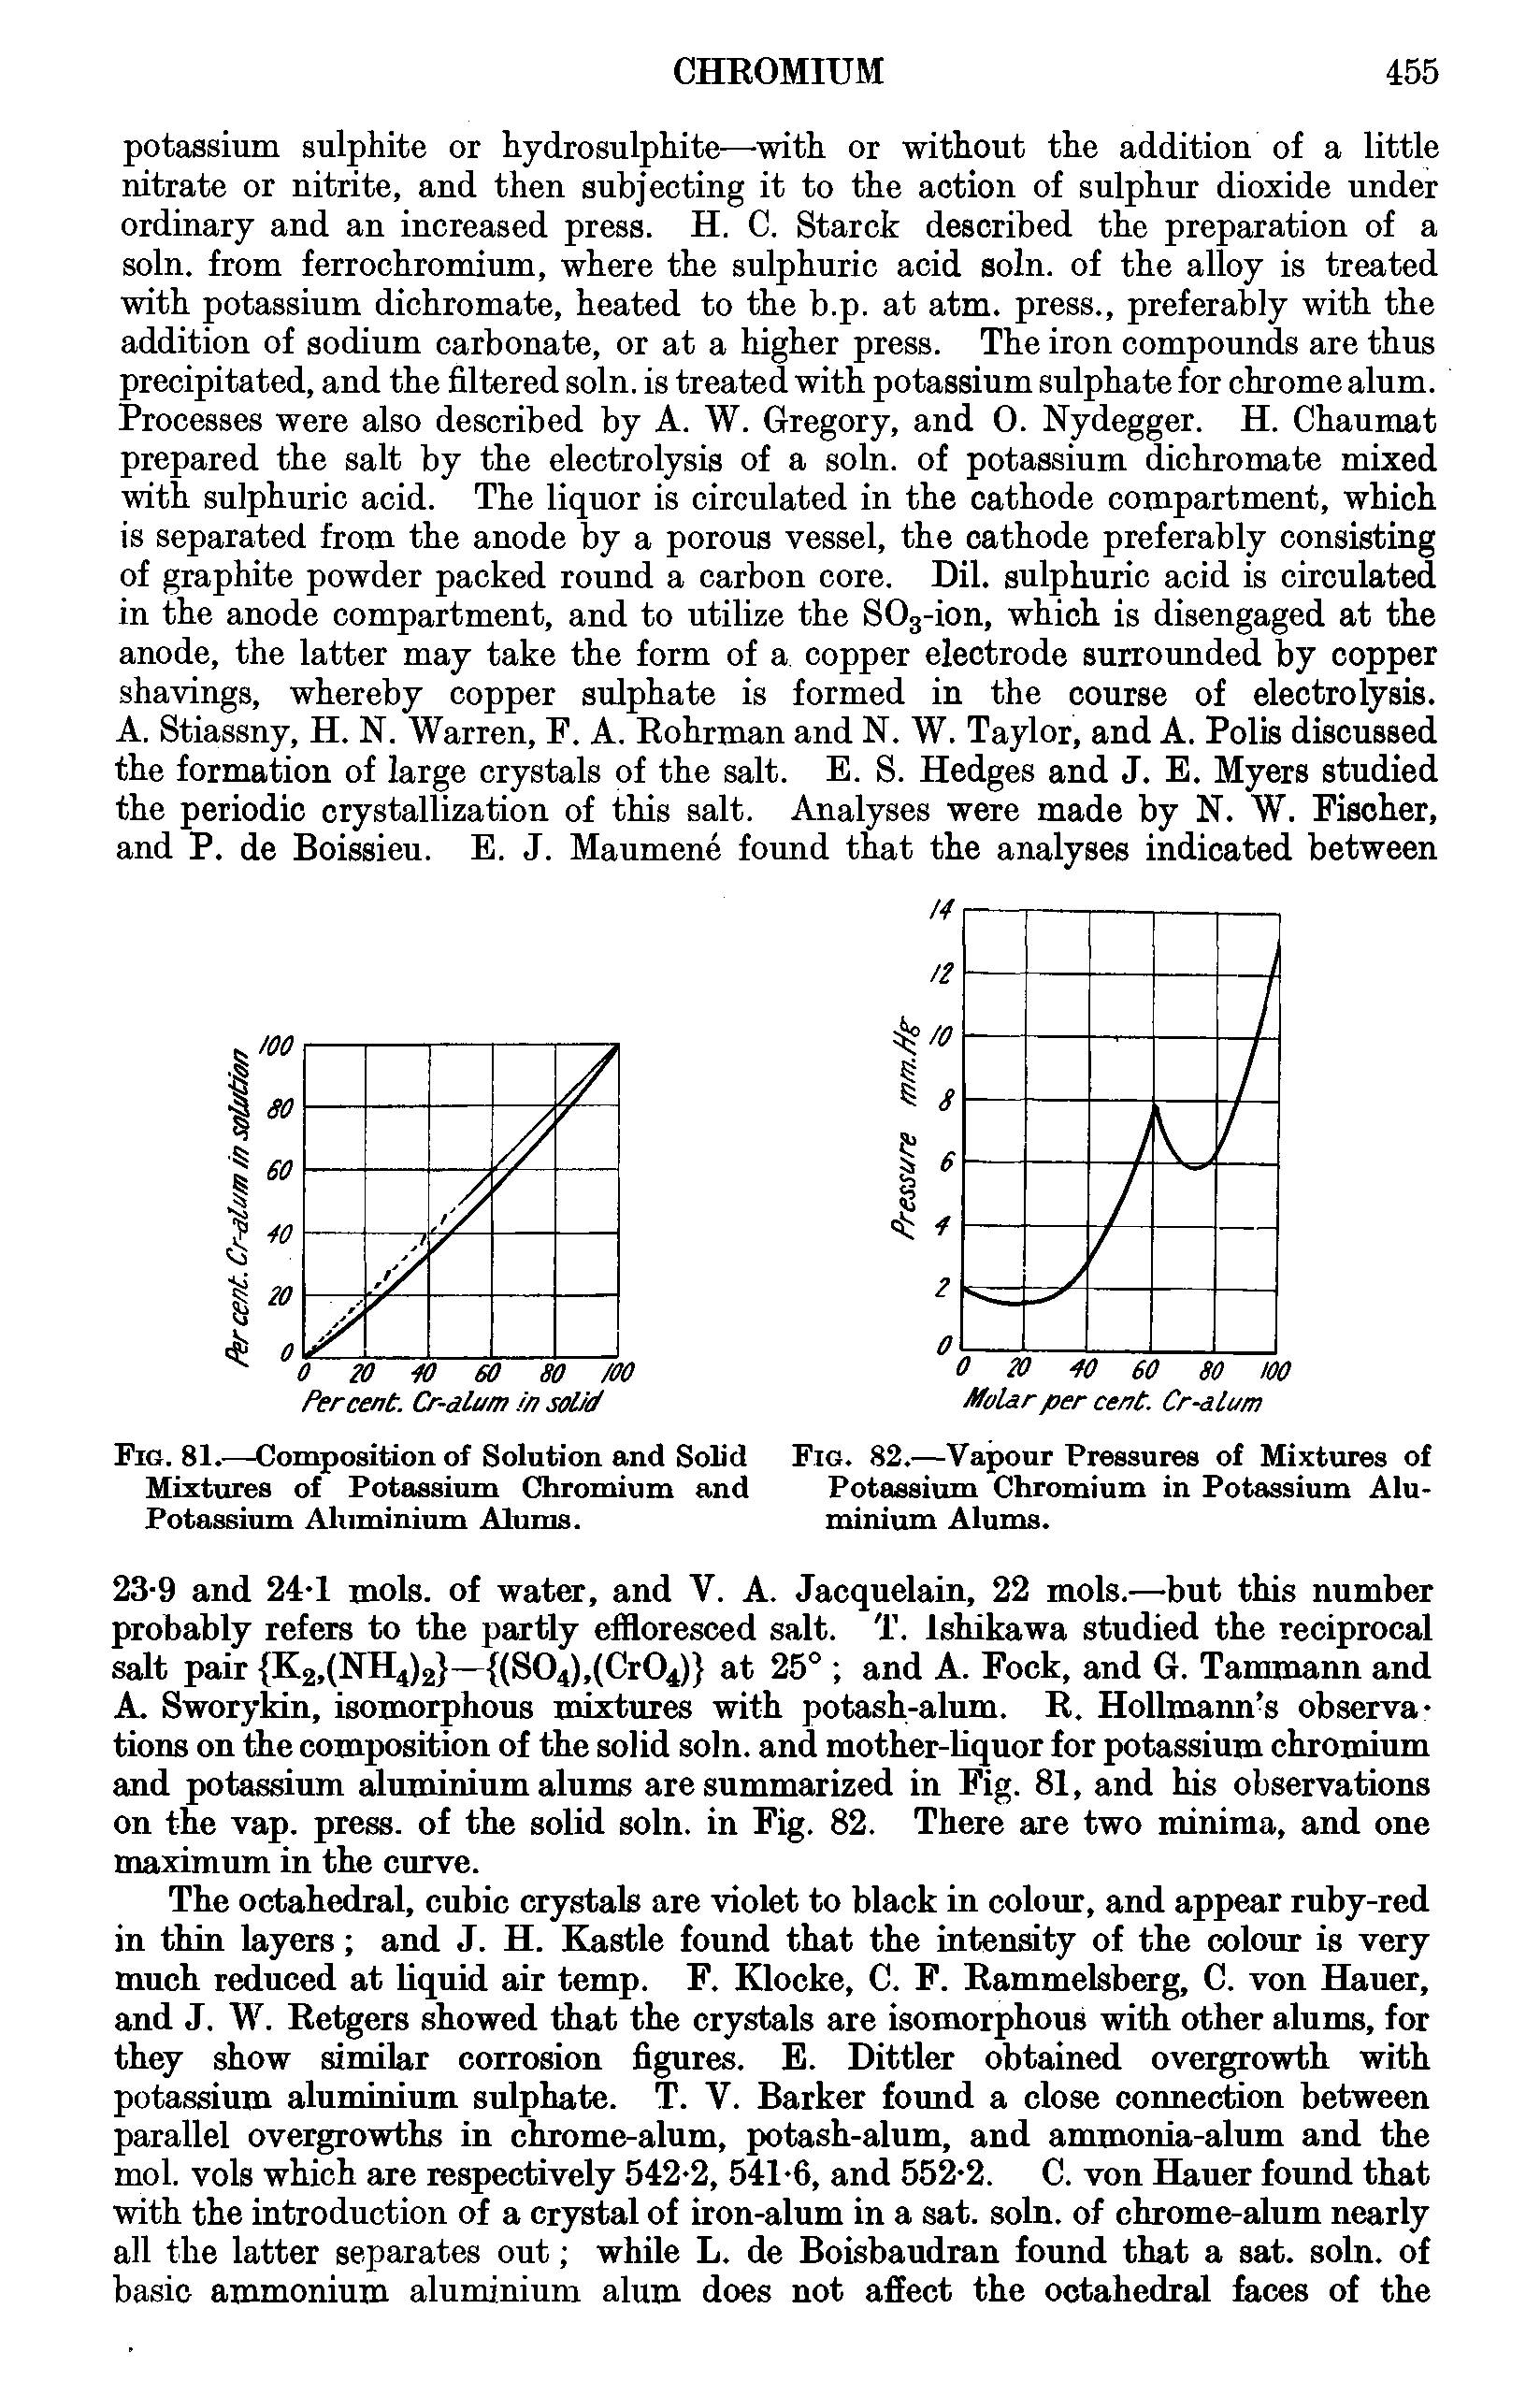 Fig. 81.—Composition of Solution and Solid Mixtures of Potassium Chromium and Potassium Aluminium Alums.